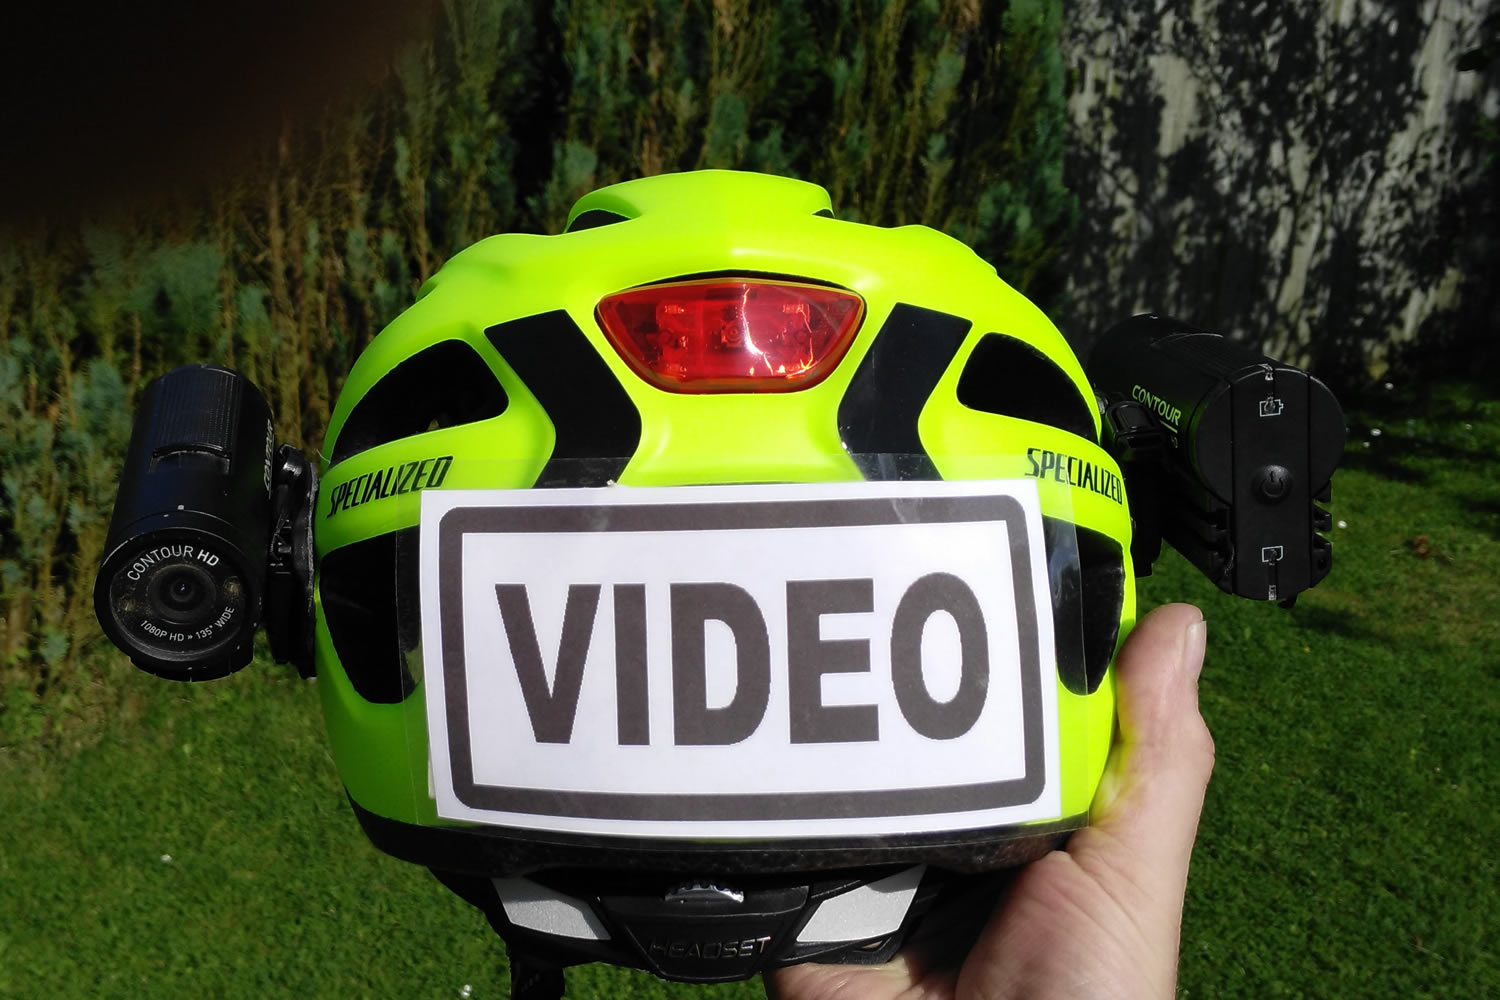 Helmet with cameras